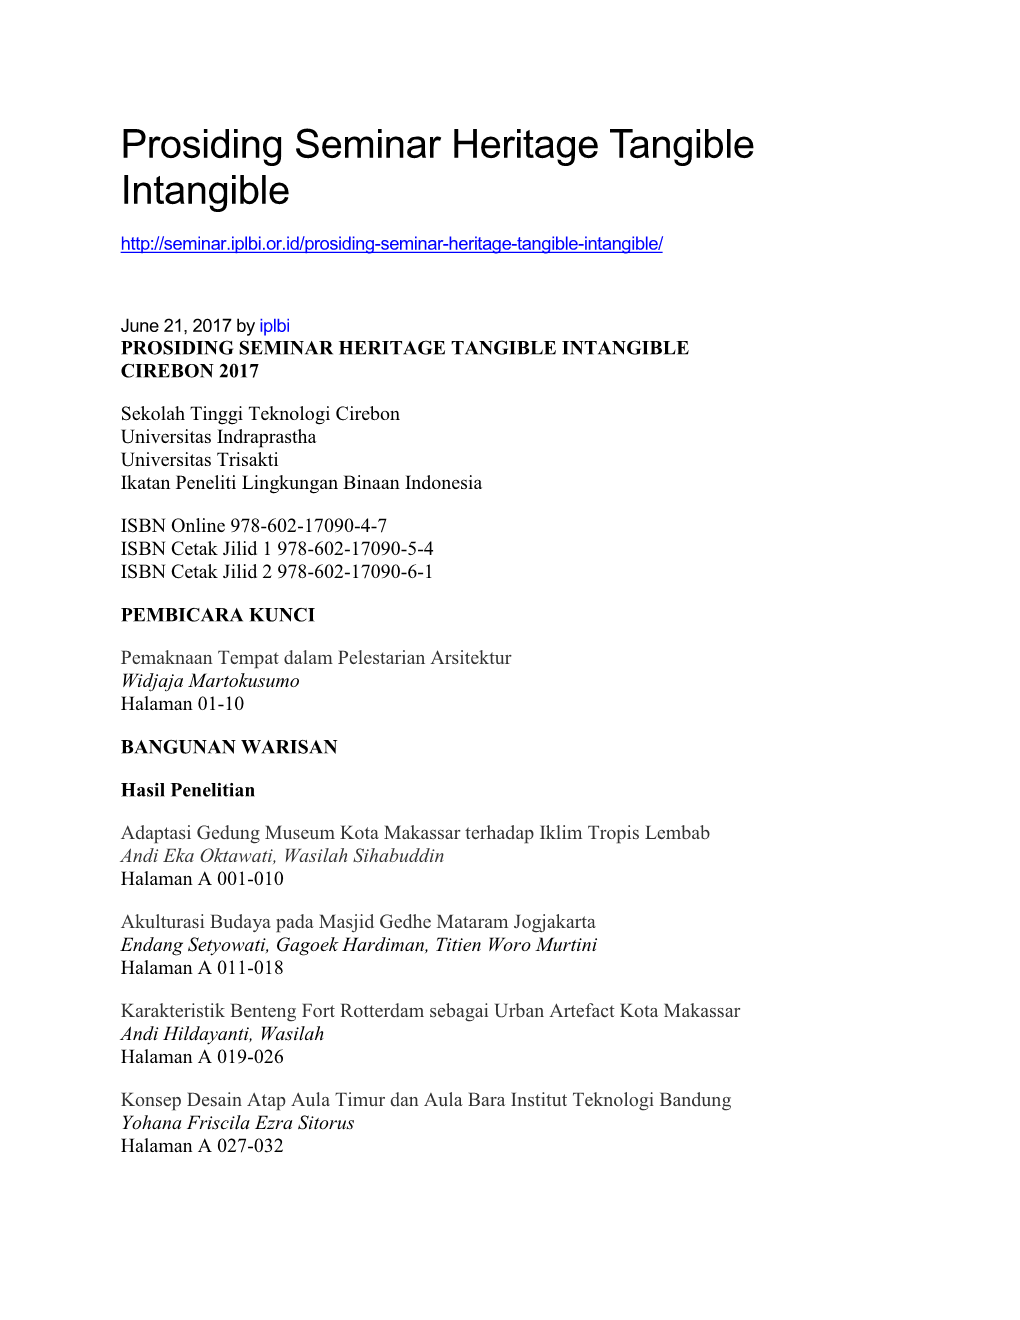 Prosiding Seminar Heritage Tangible Intangible